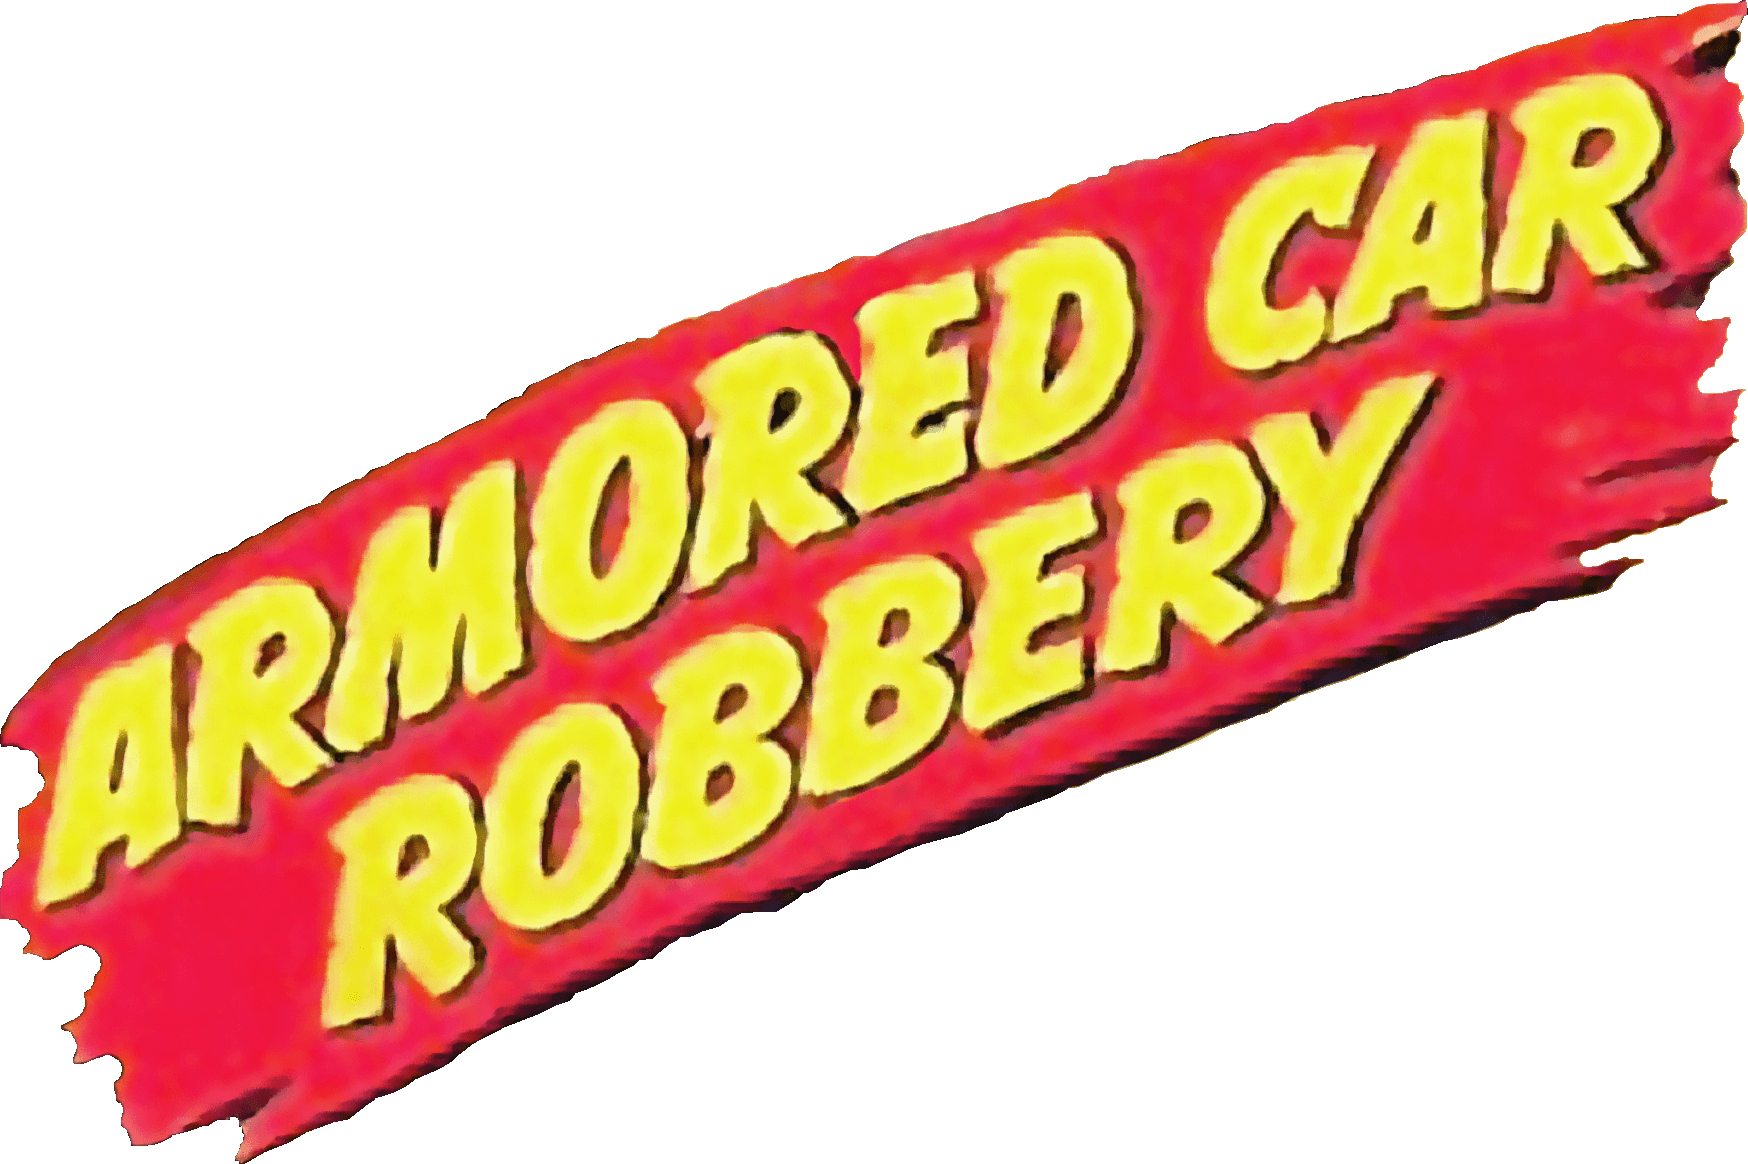 Armored Car Robbery logo